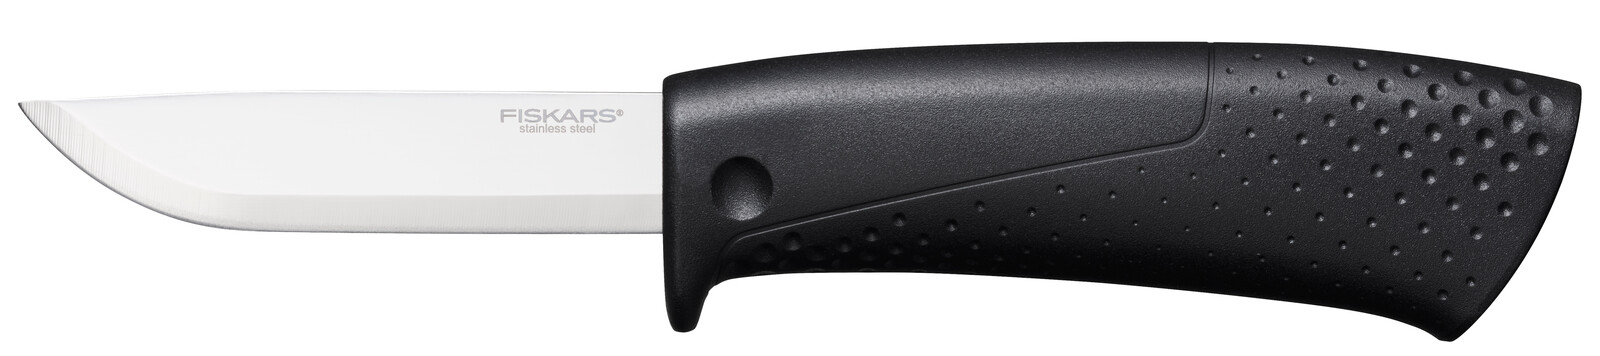 Цена нож нескладной Fiskars 1023617 в Черкассах